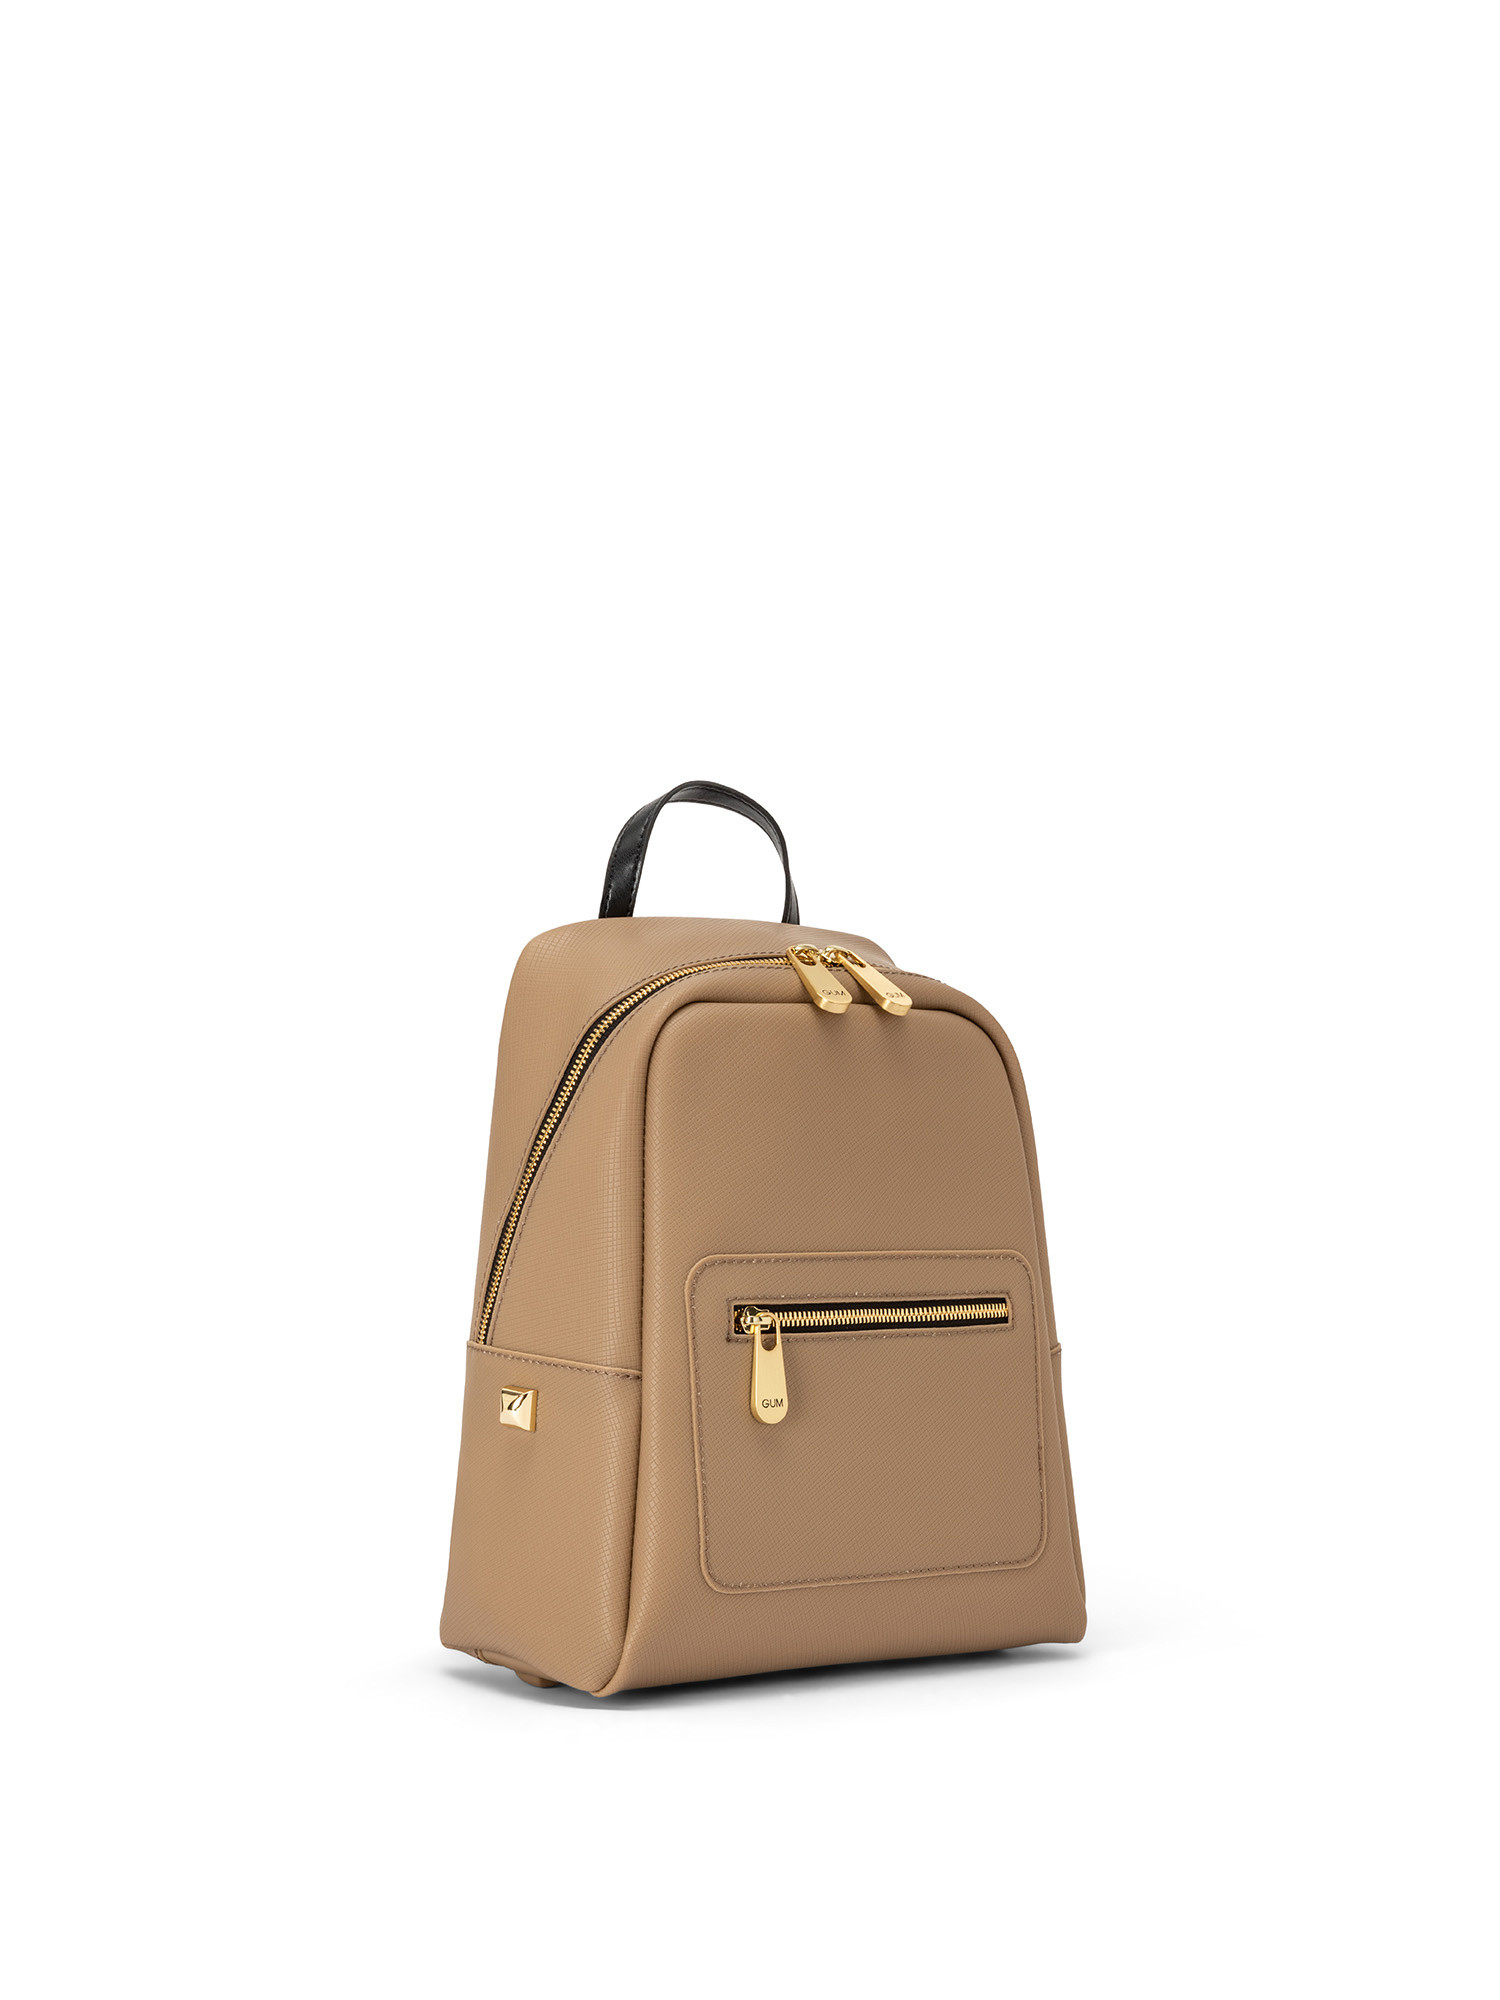 Medium Maxi Studs backpack, Beige, large image number 1